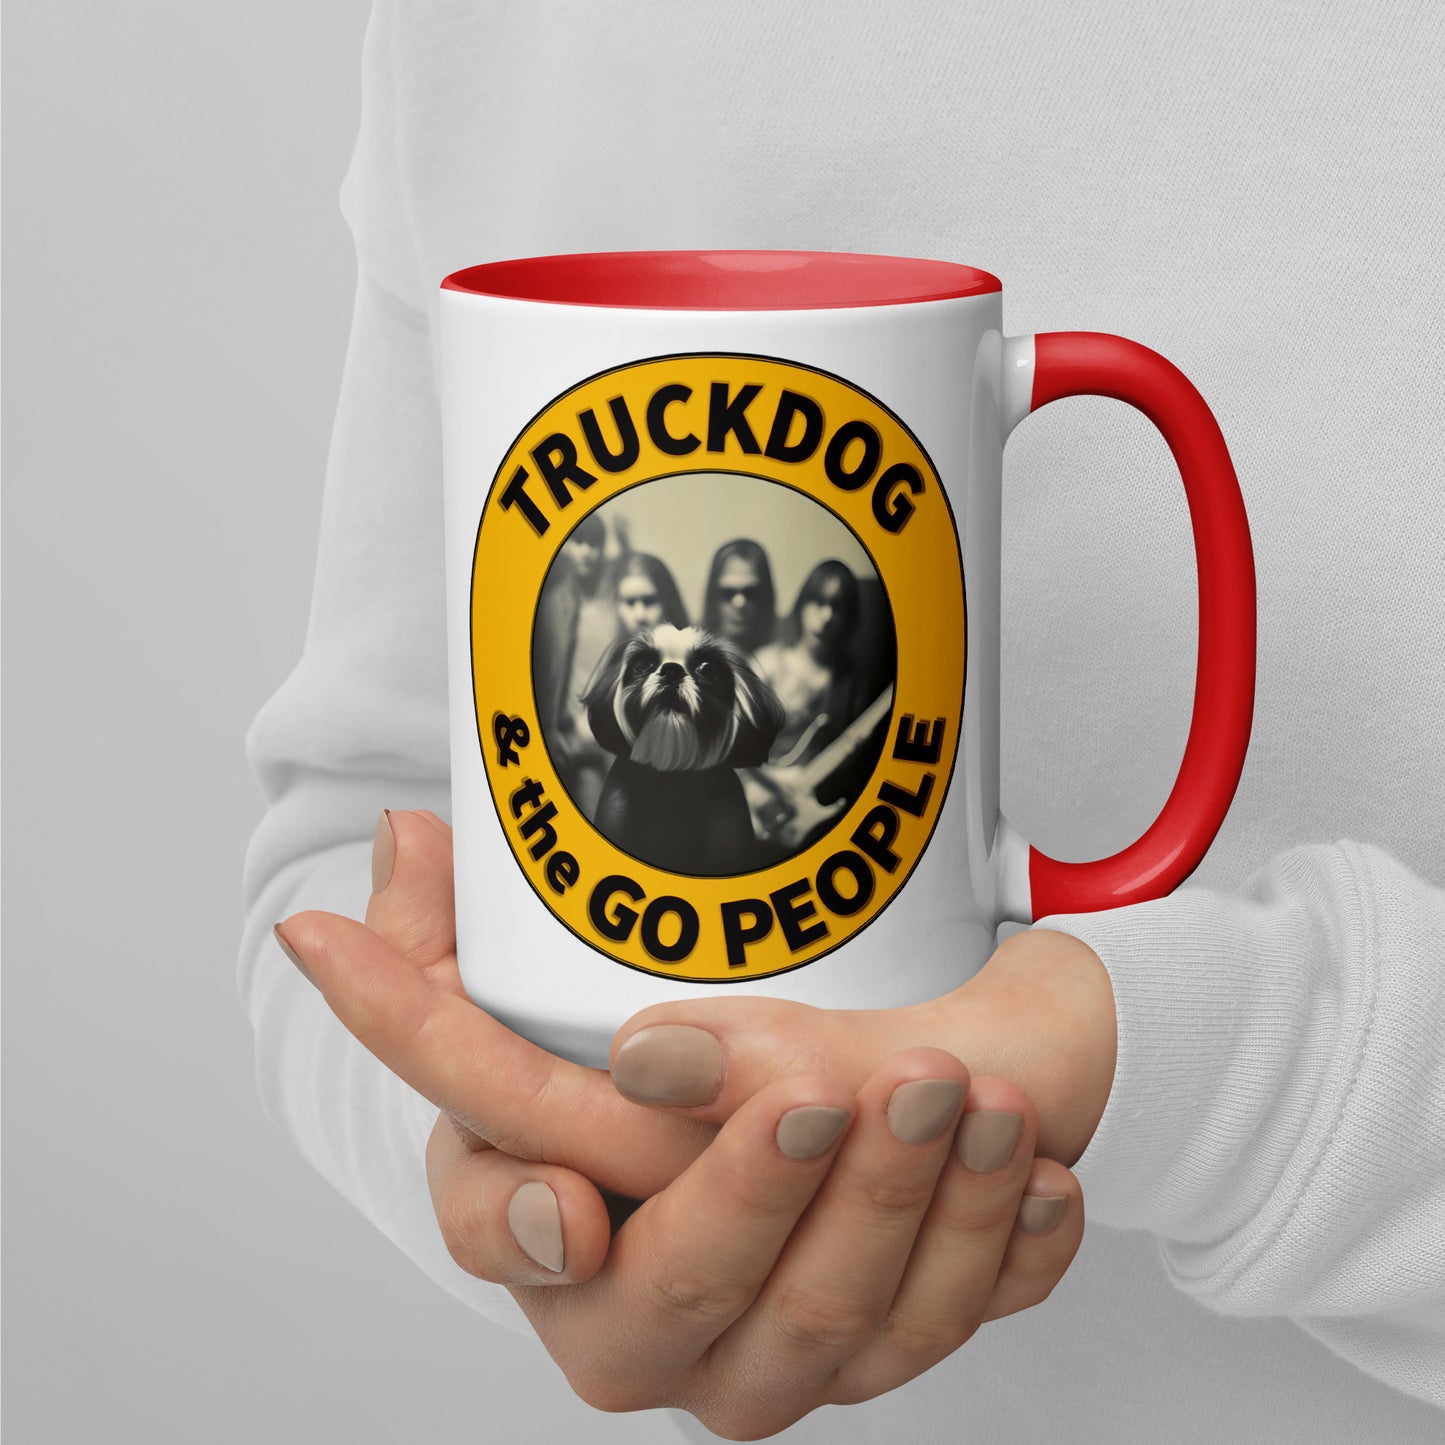 TruckDog & The Go People Classic Dog Logo Mug With Color Inside